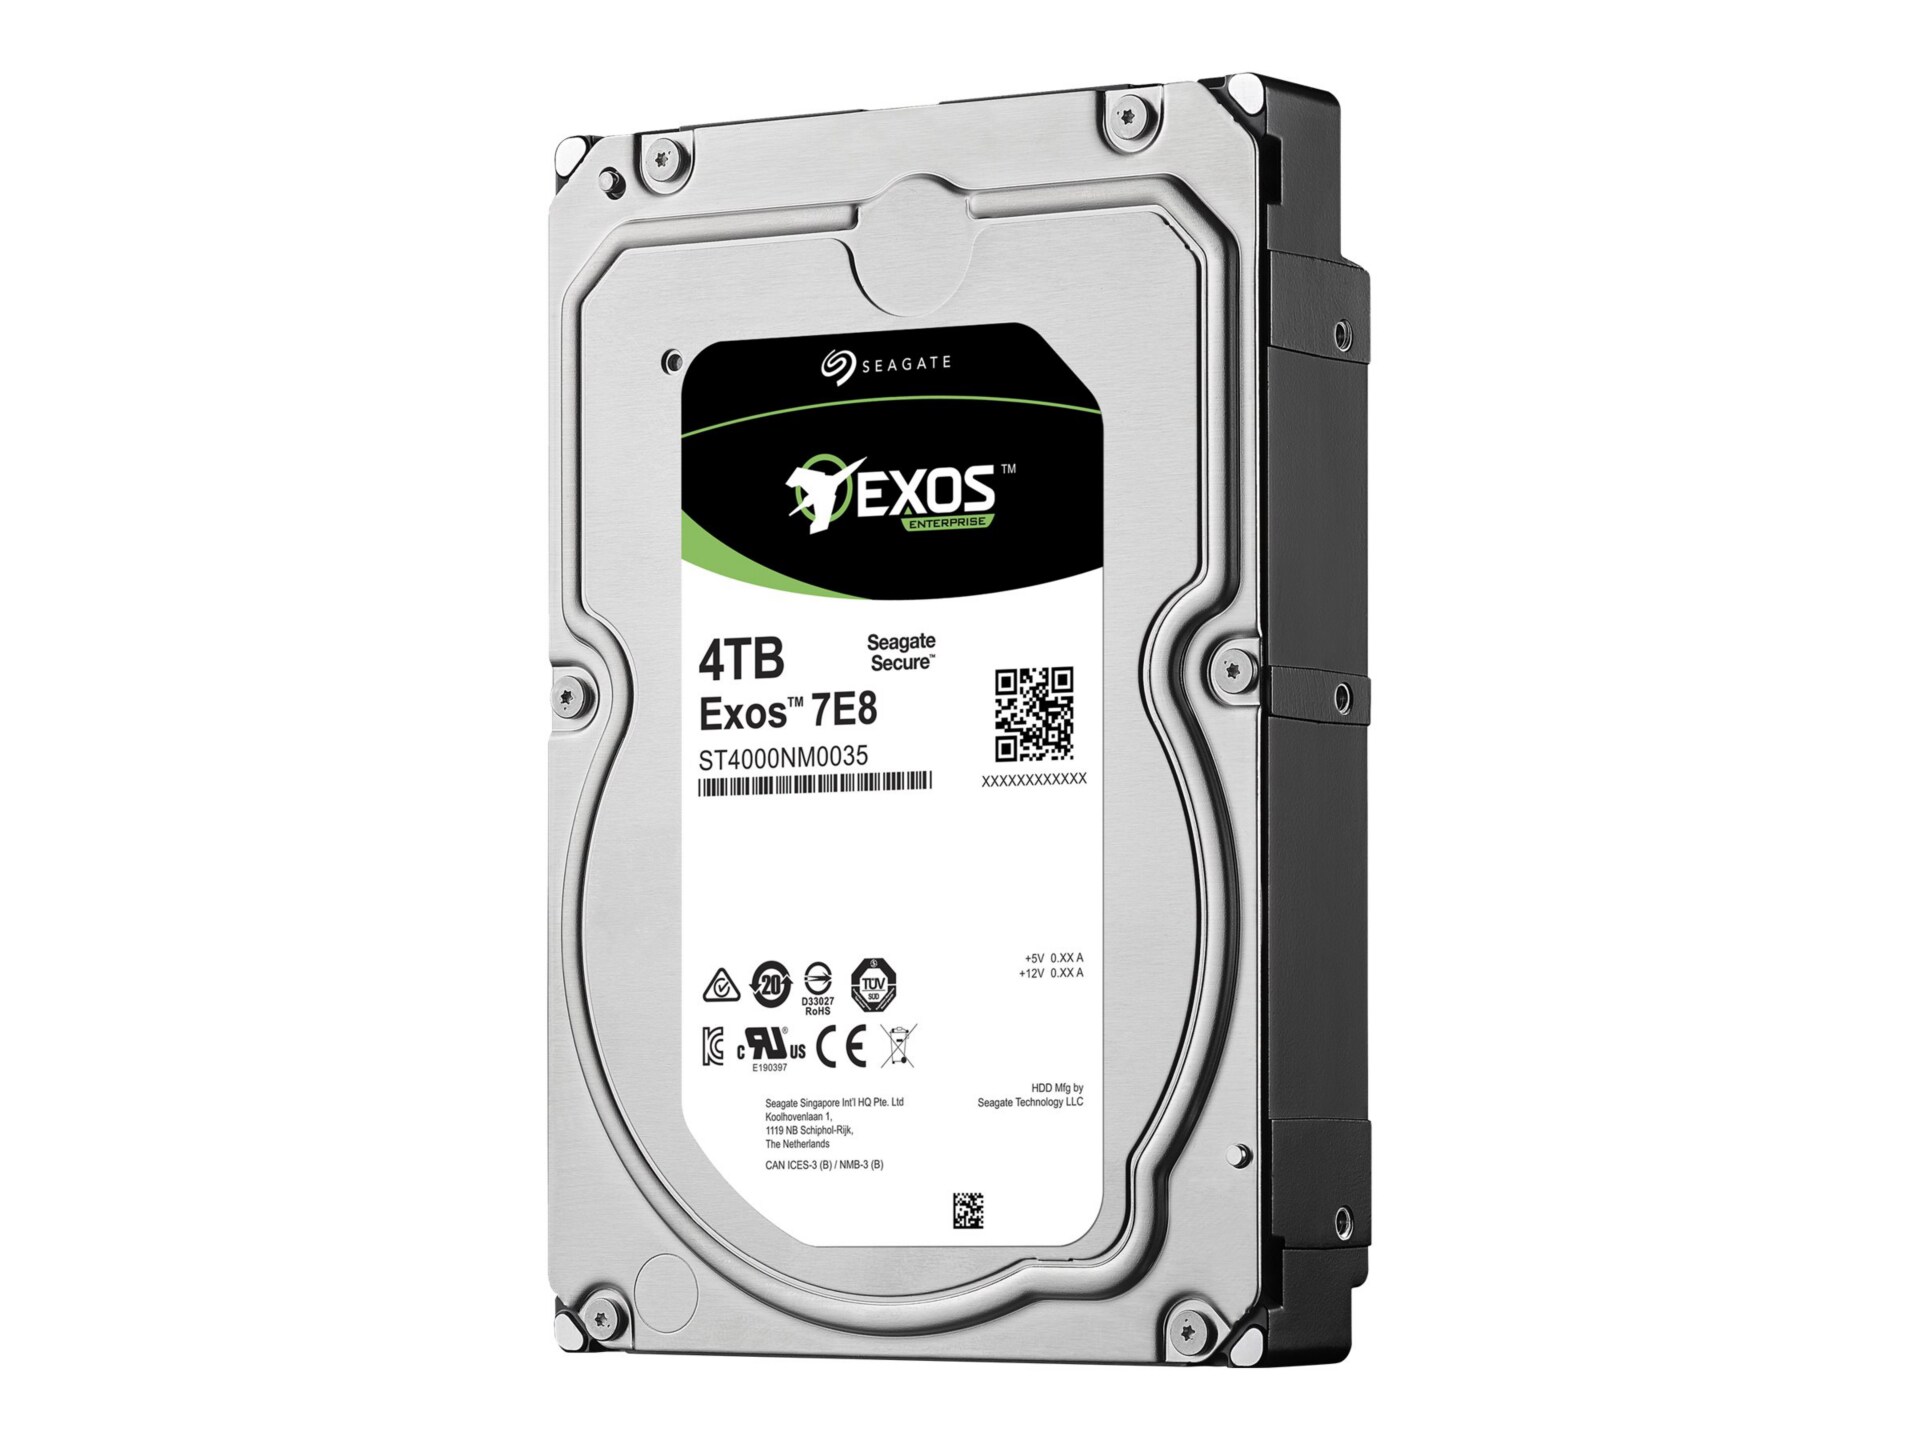 Seagate Exos 7E8 ST4000NM0035 - hard drive - 4 TB - SATA 6Gb/s